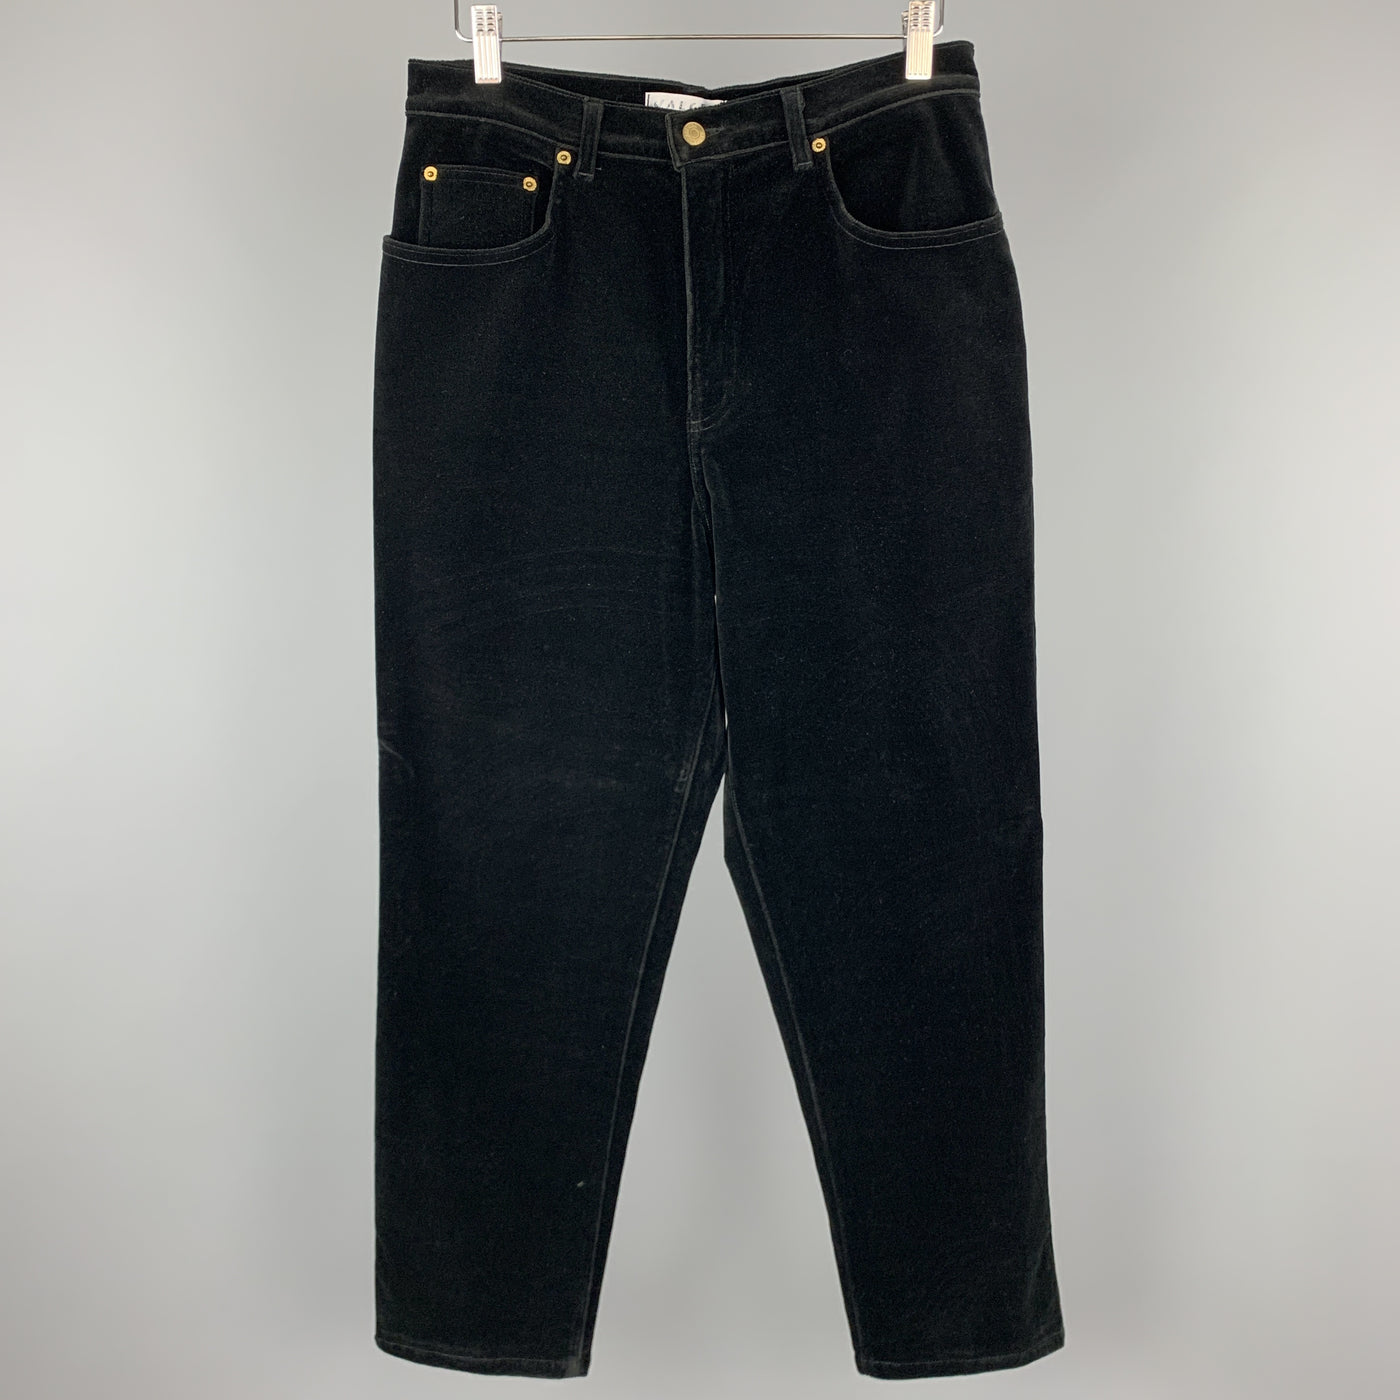 JAEGER Size 12 Black Stretch Velvet Jeans